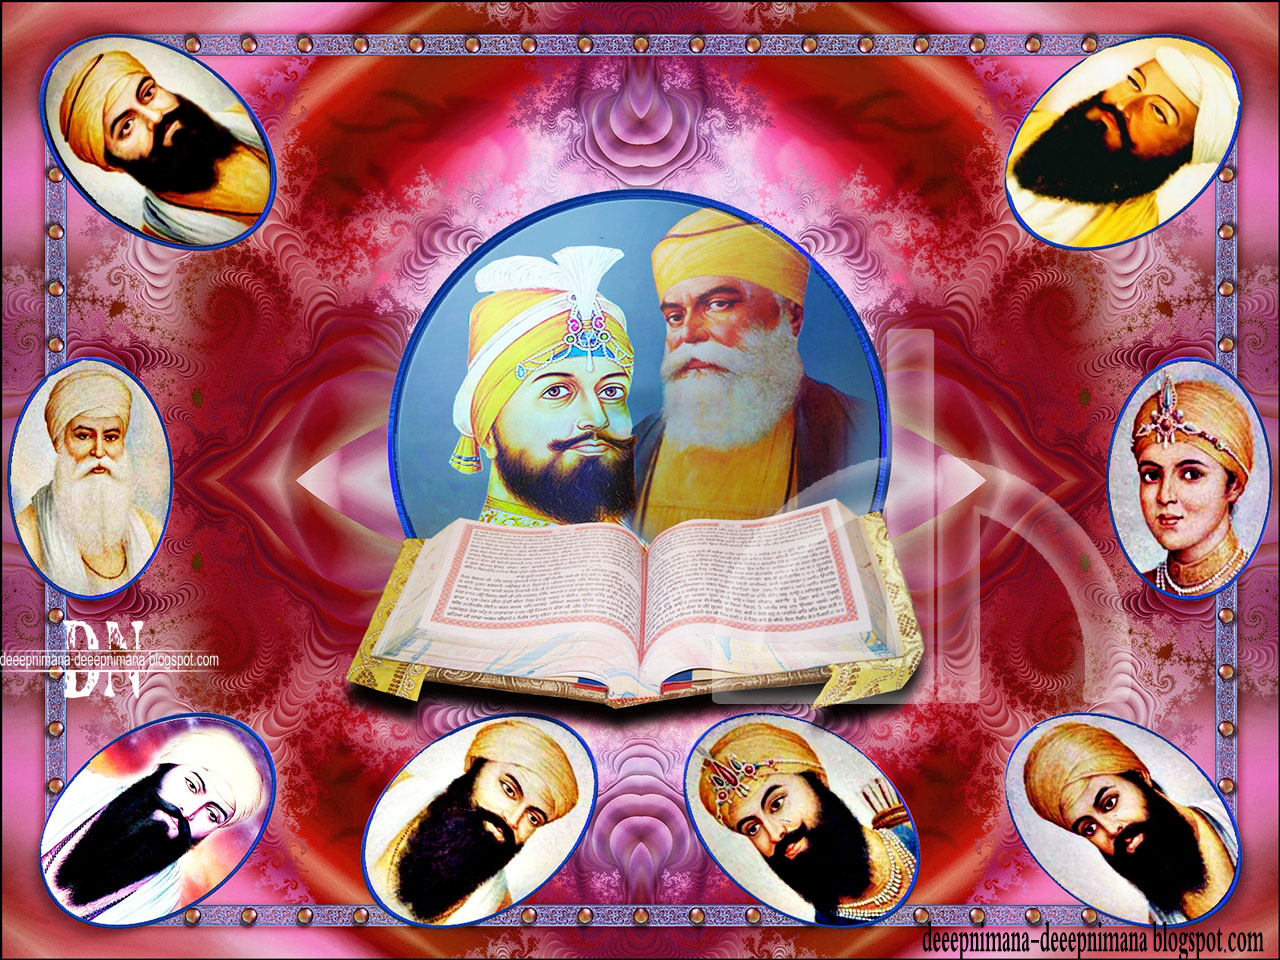 Deeepnimana Deeepnimana Blogspot.com: Sikh Gurus